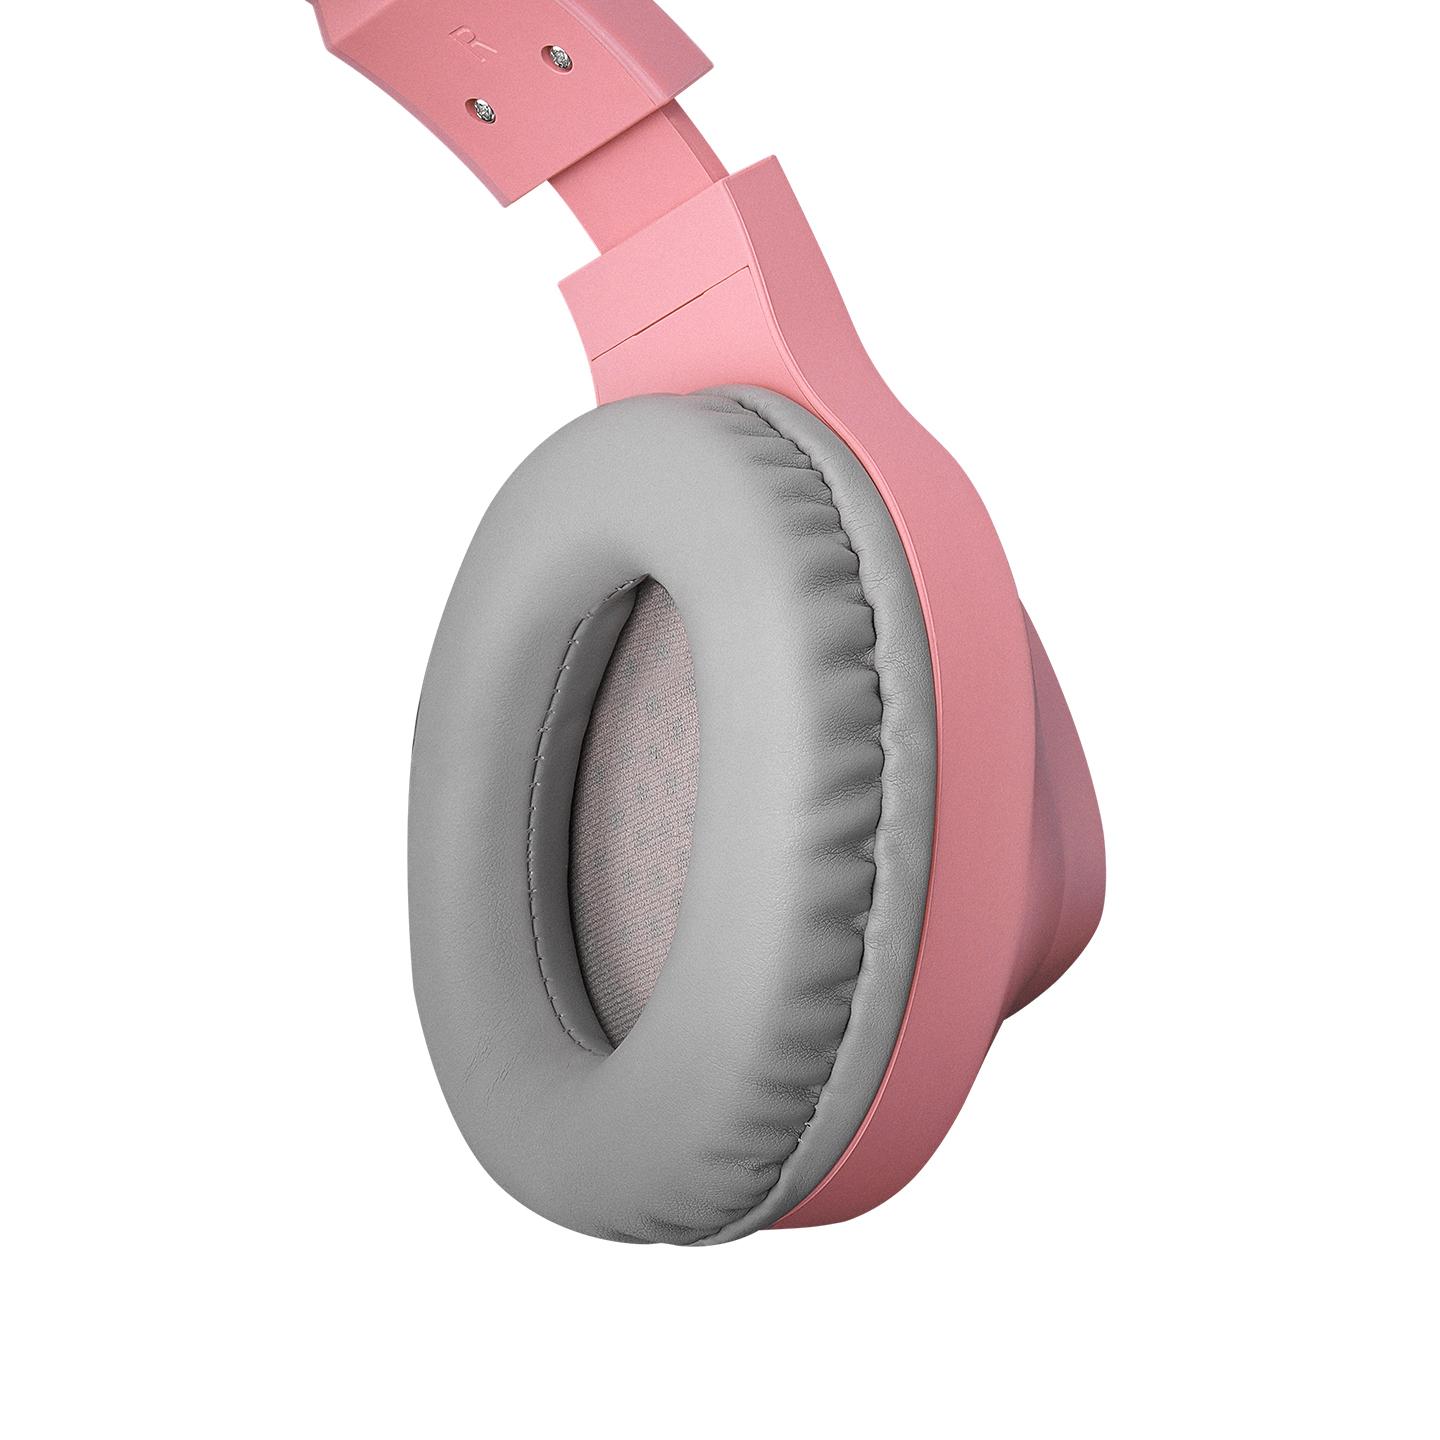 Selected image for RAMPAGE Gejmerske slušalice sa mikrofonom M7 MONCHER RGB Led USB 7.1 roze